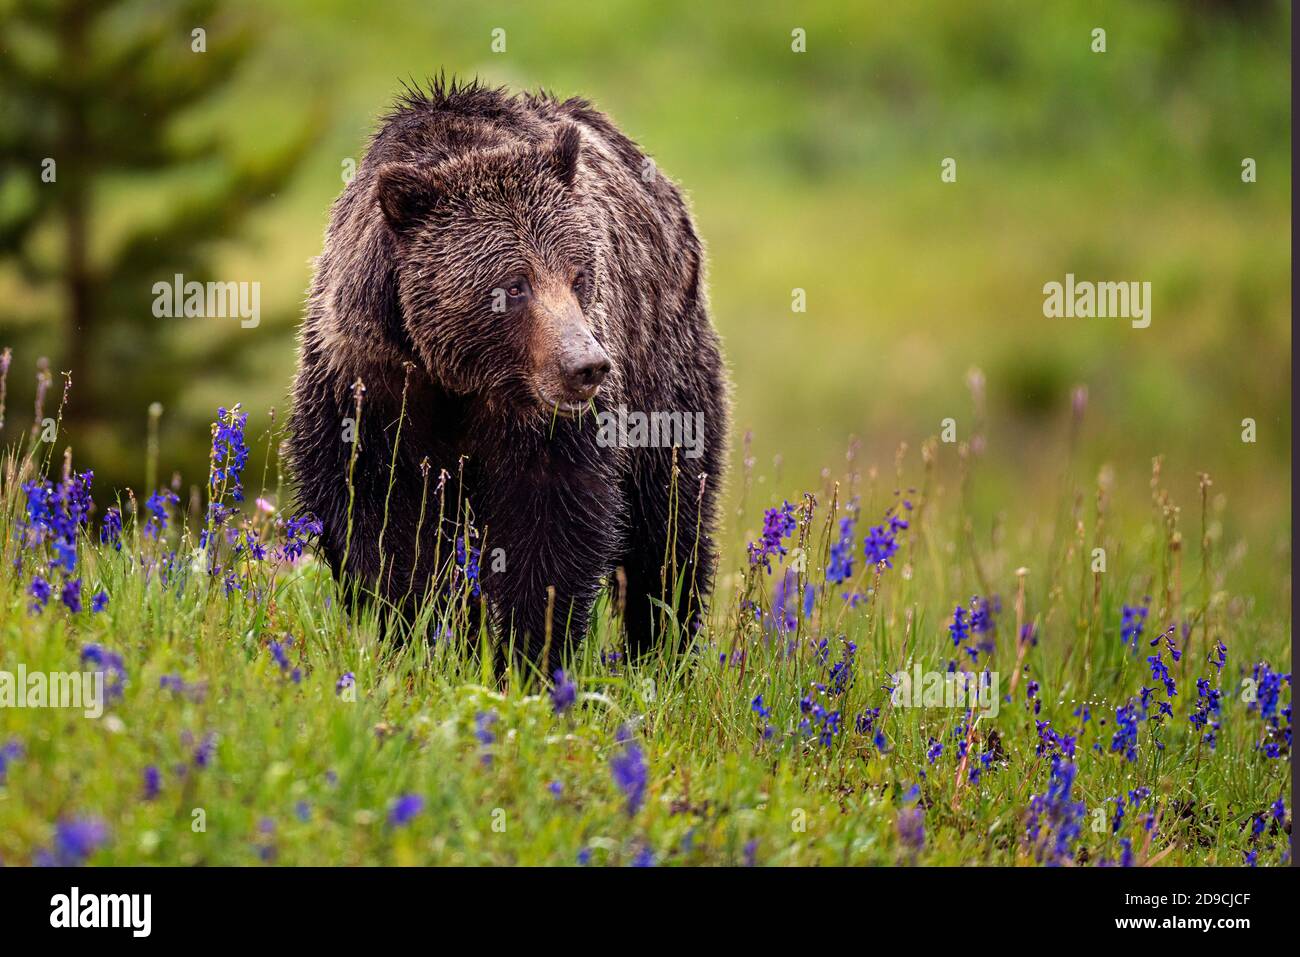 Grizzly bear Stockfoto